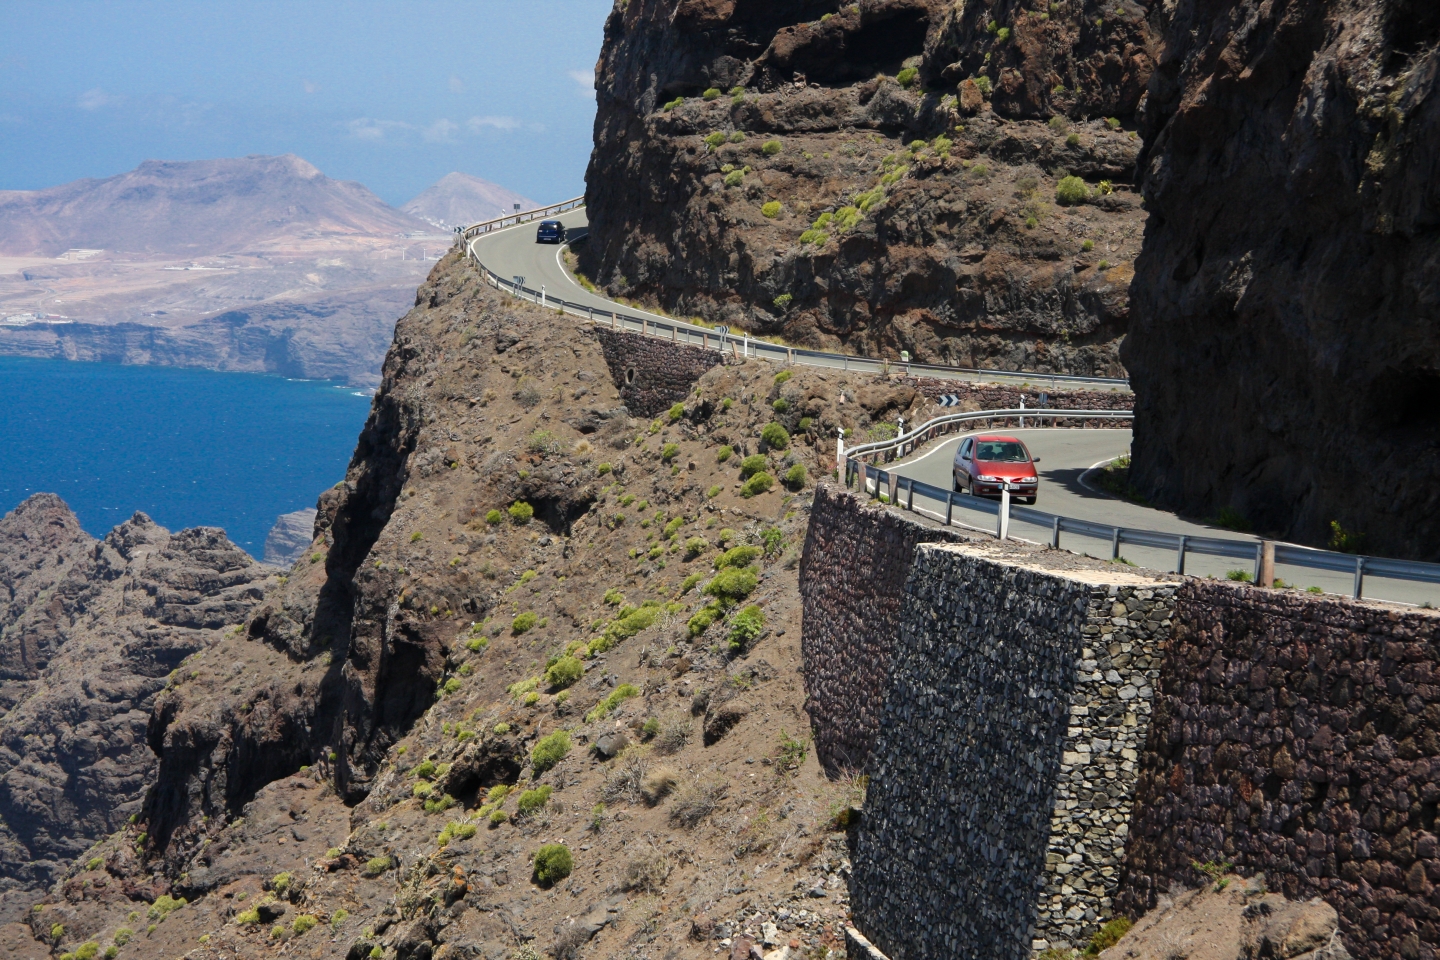 The GC 200 west coast road in Gran Canaria